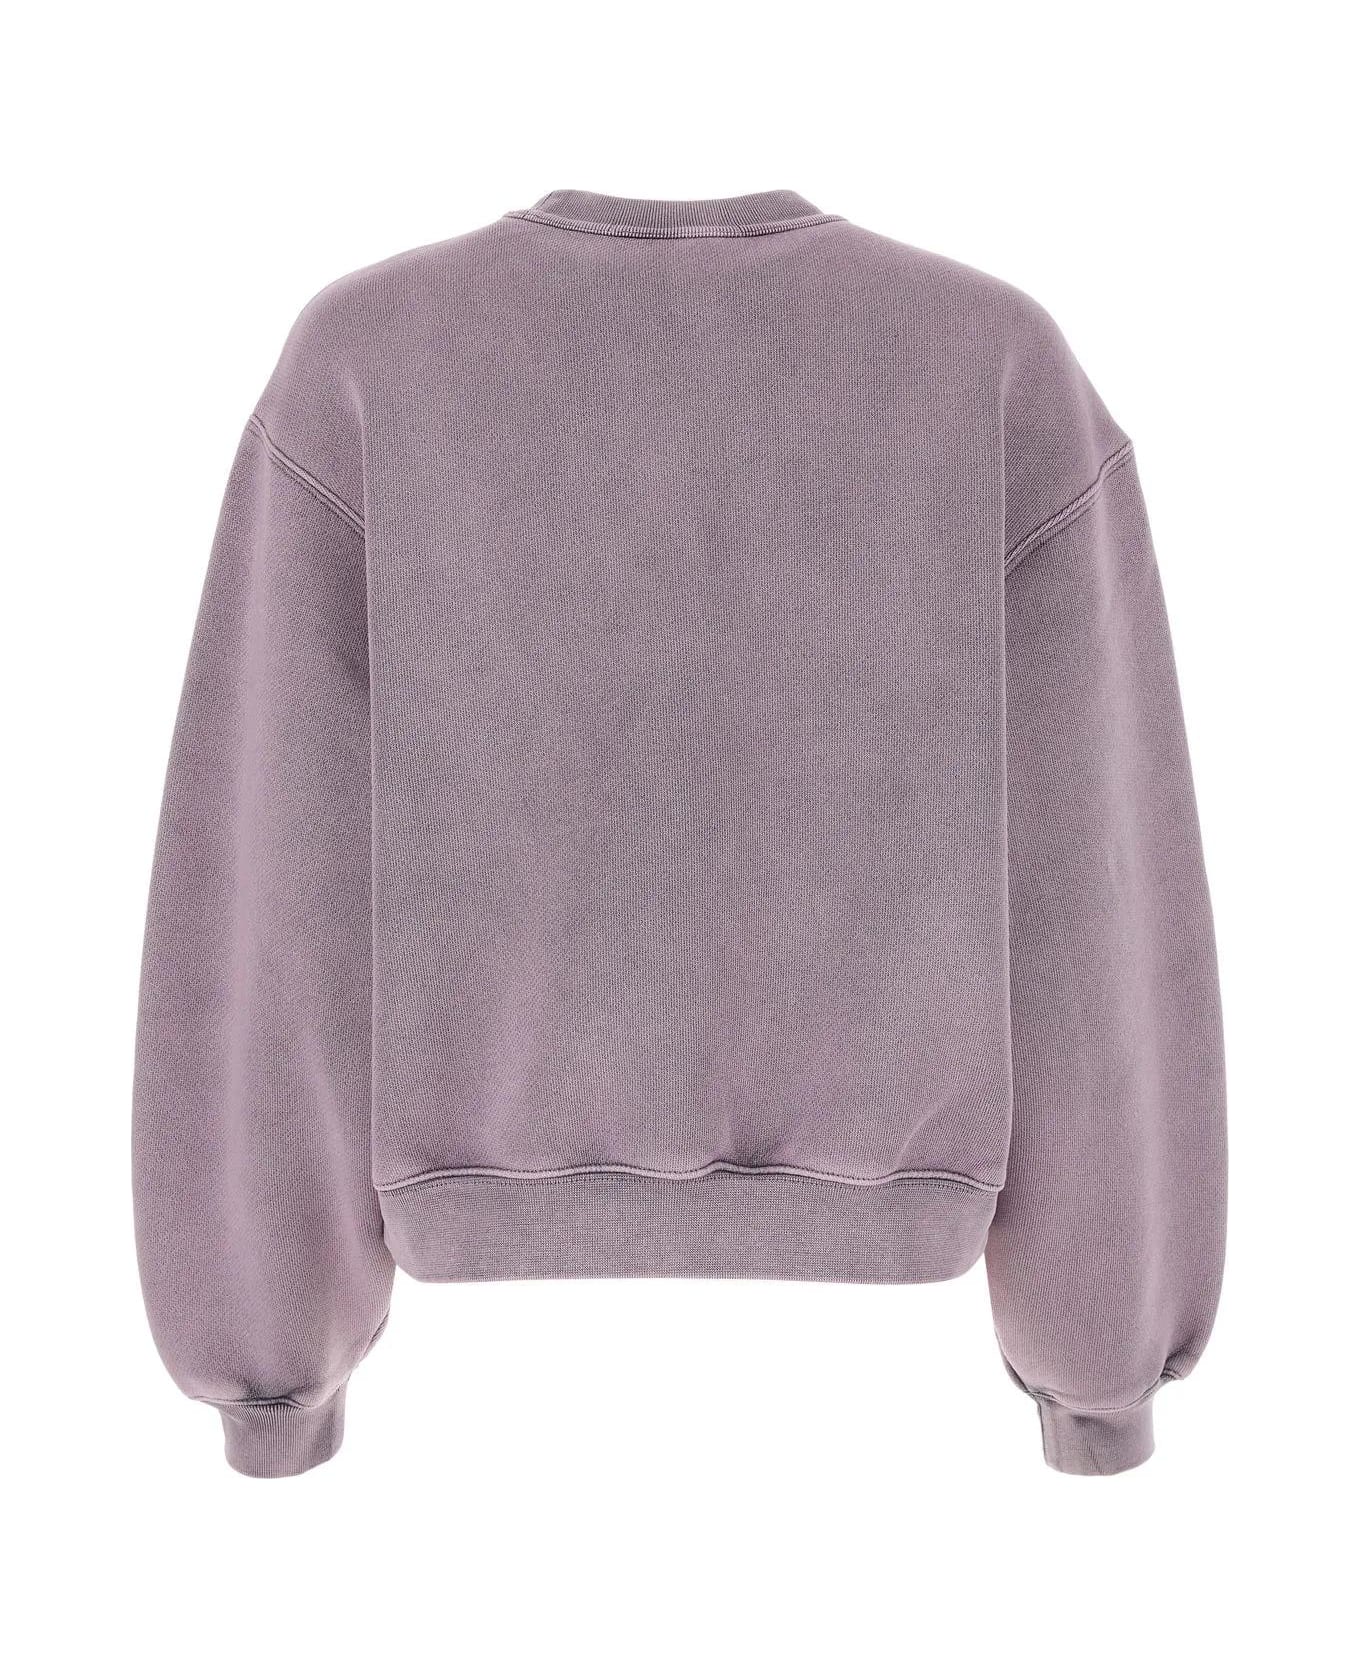 Alexander Wang Pink Cotton Blend Sweatshirt - A Acid Pink Lavender